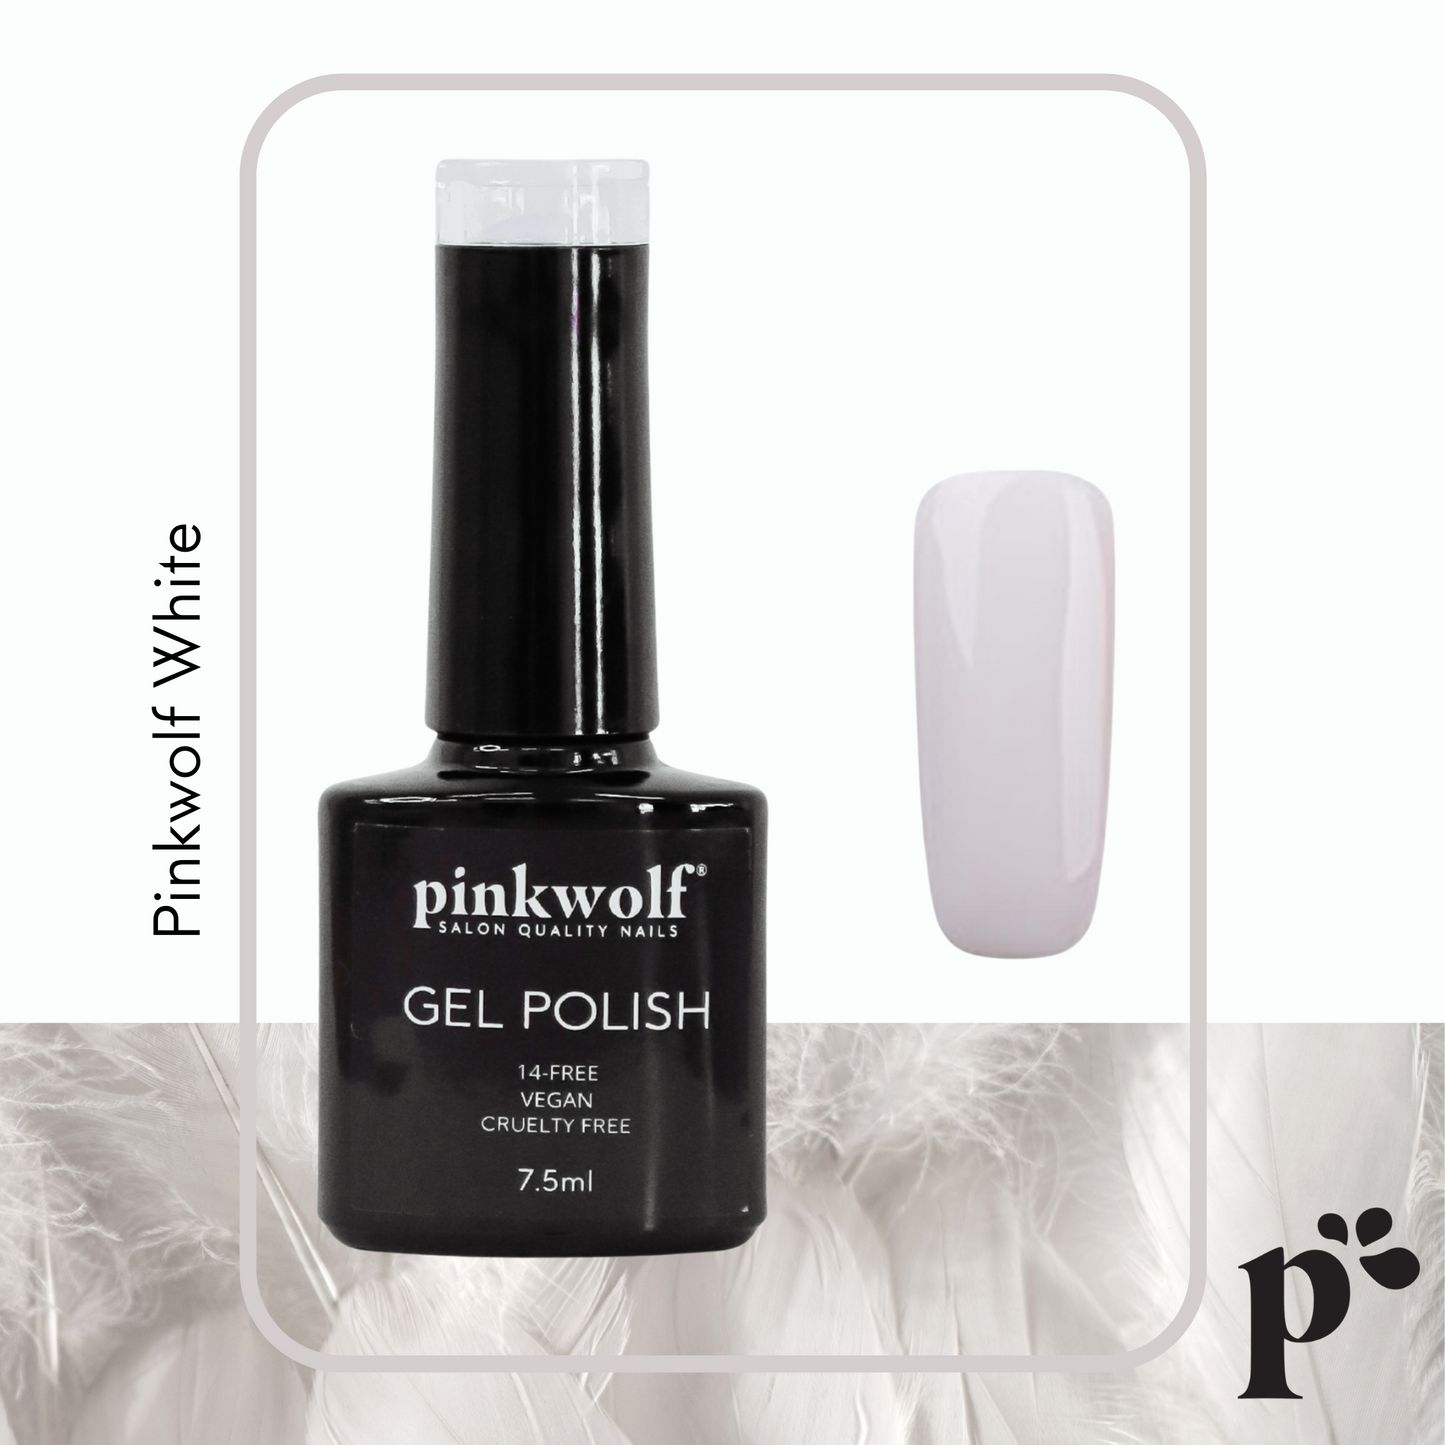 Pinkwolf white gel nail polish 7.5ml bottle 